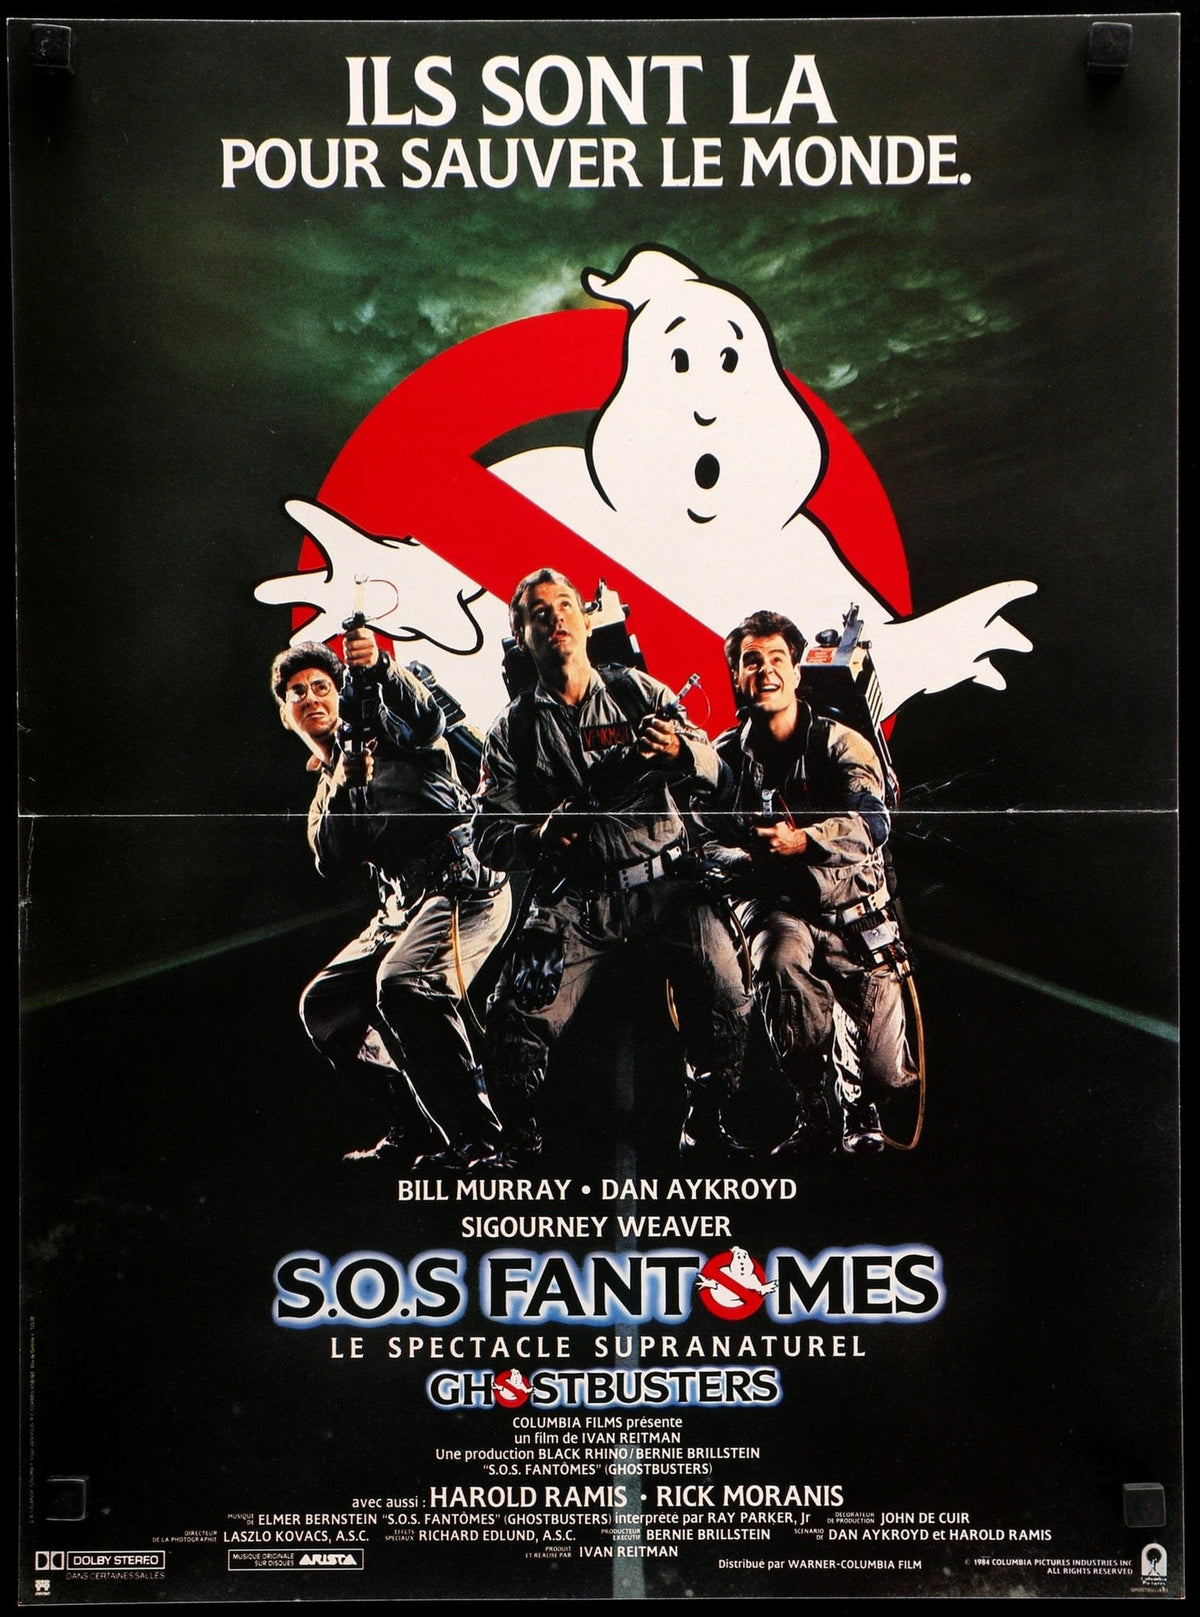 Ghostbusters (1984) original movie poster for sale at Original Film Art